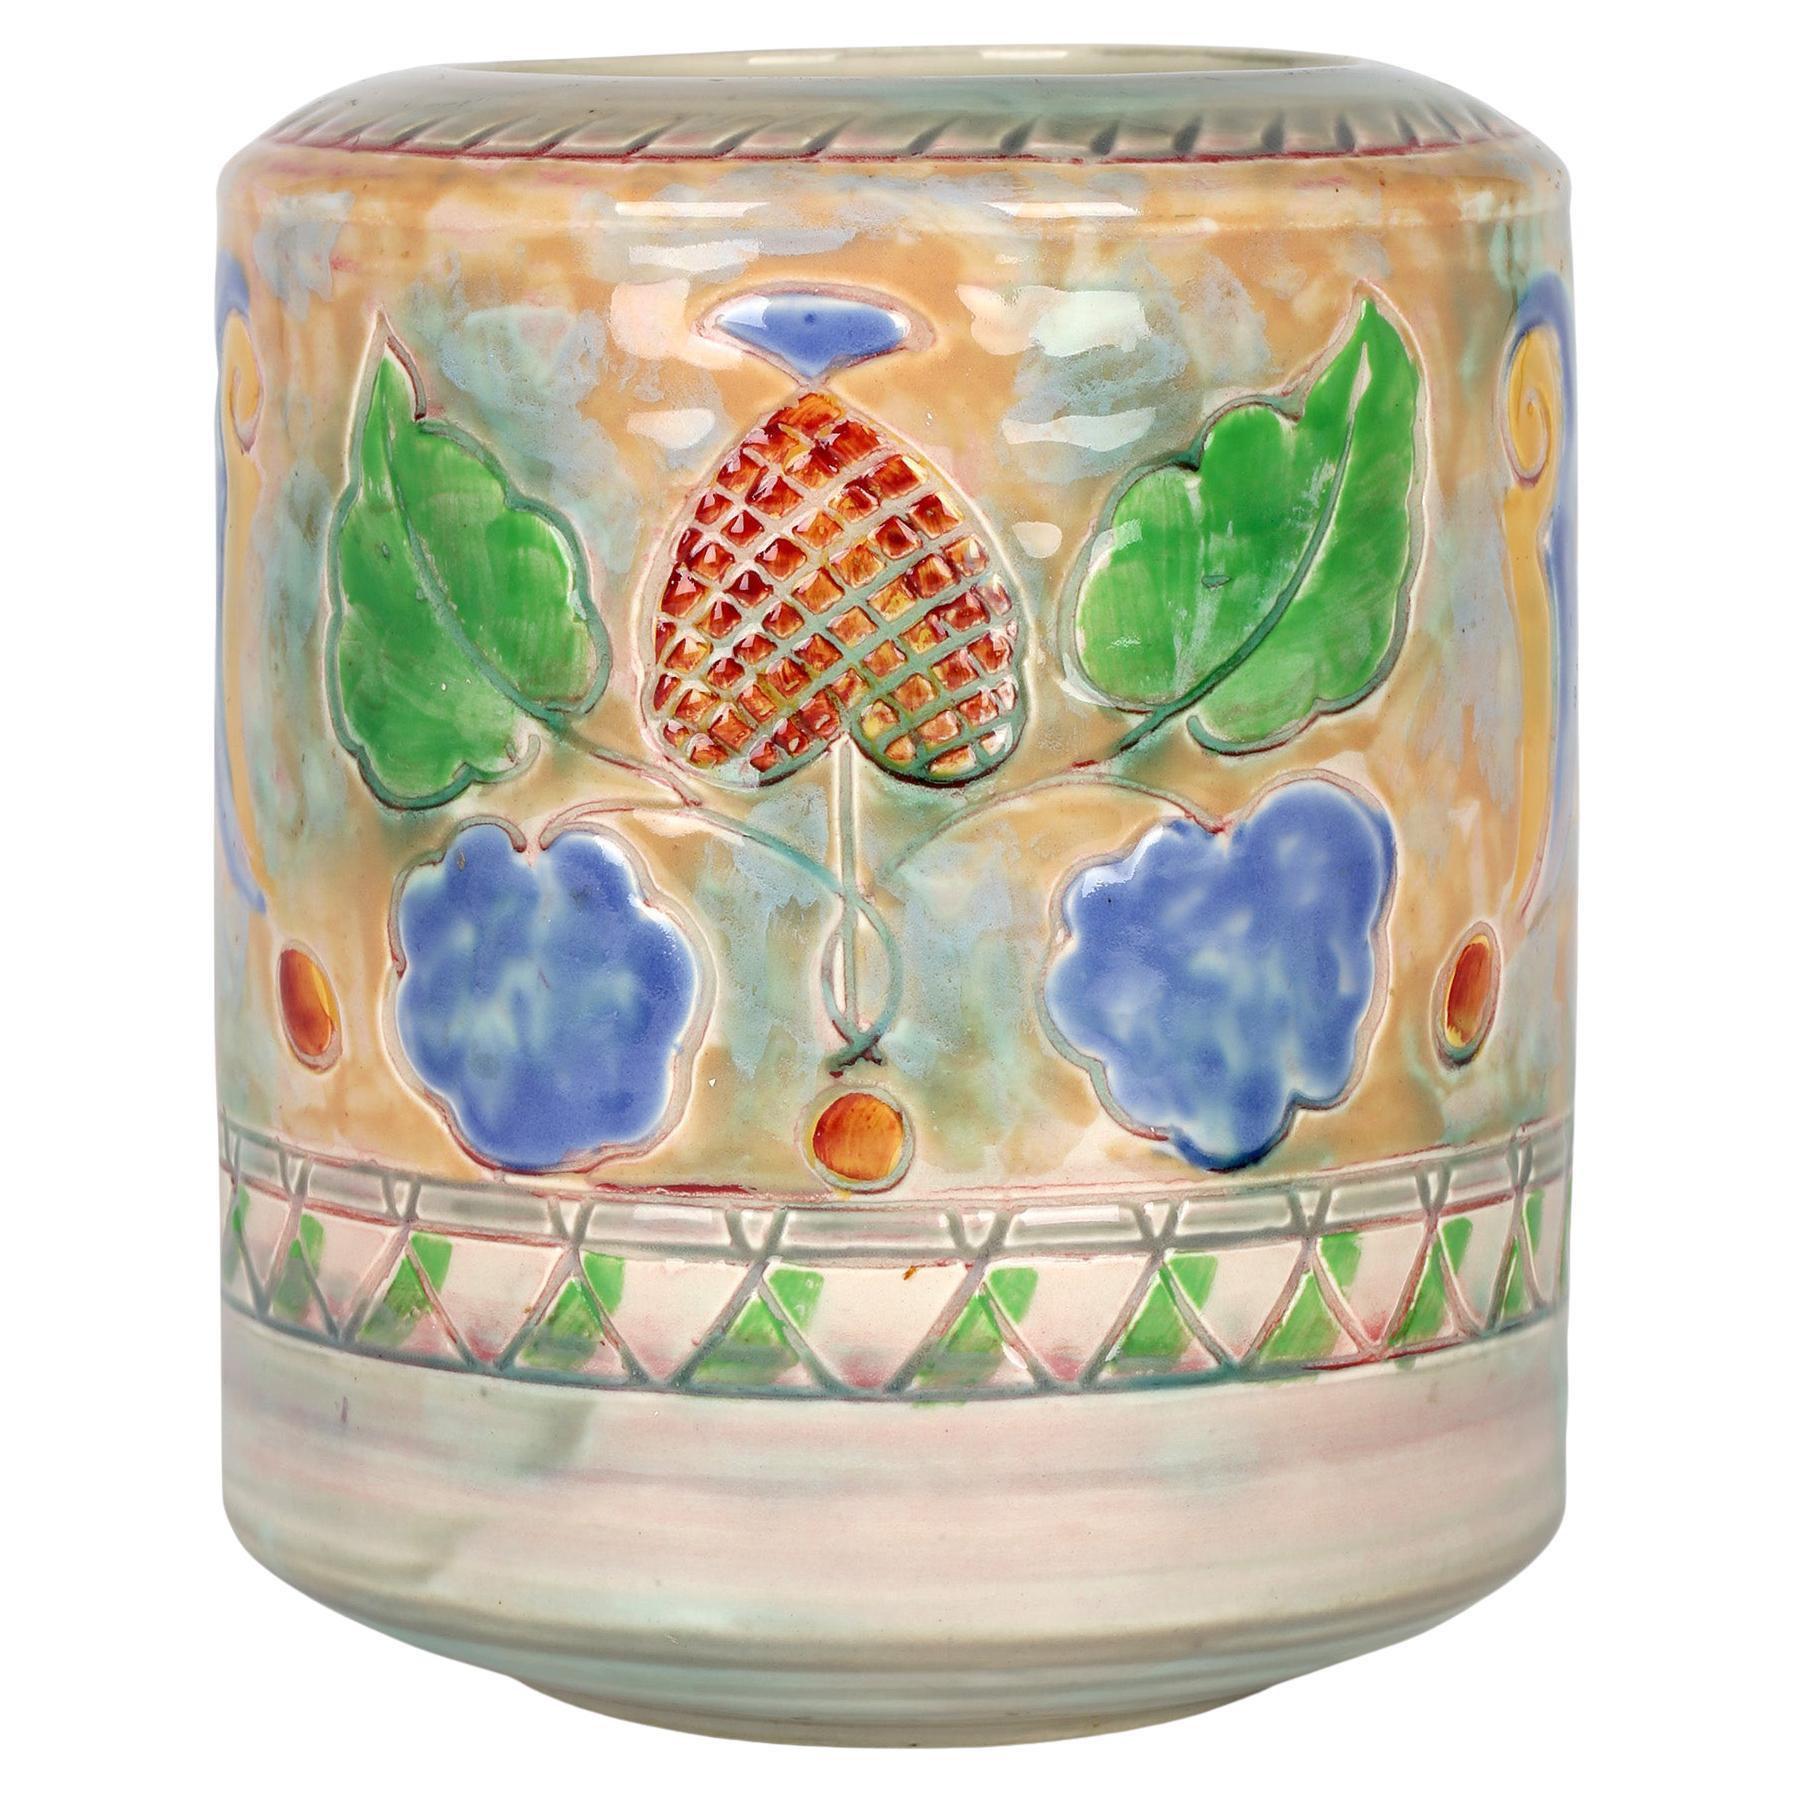 Frank Brangwyn Royal Doulton Arts & Crafts vase en poterie d'art feuille et baie